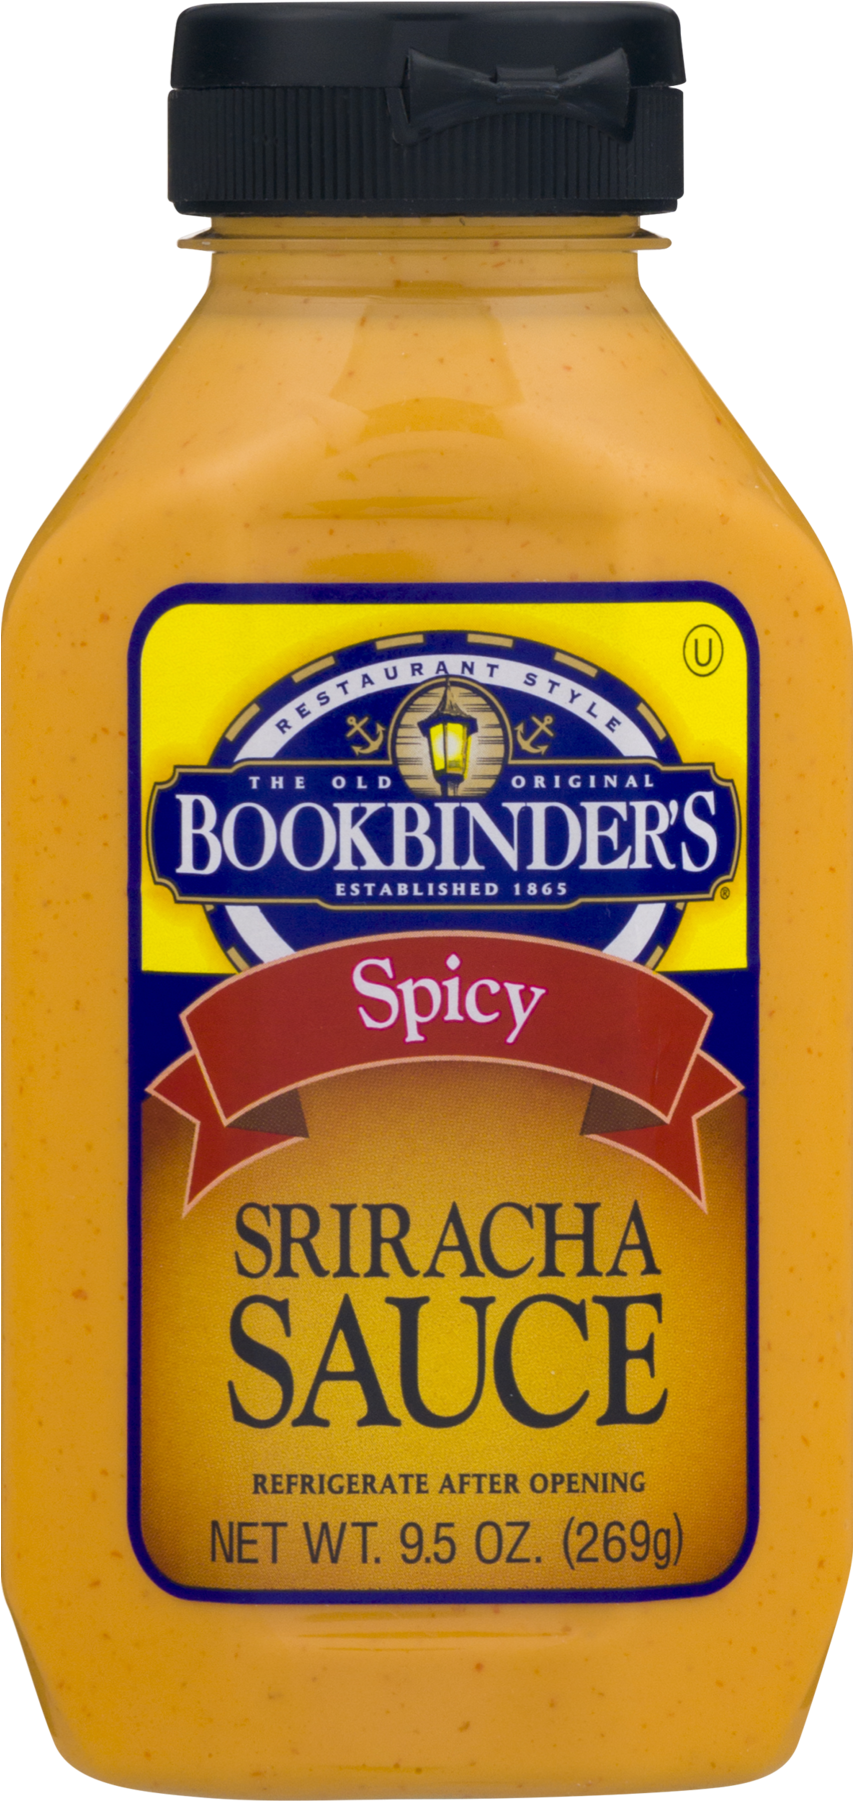 Bookbinders Spicy Sriracha Sauce Bottle